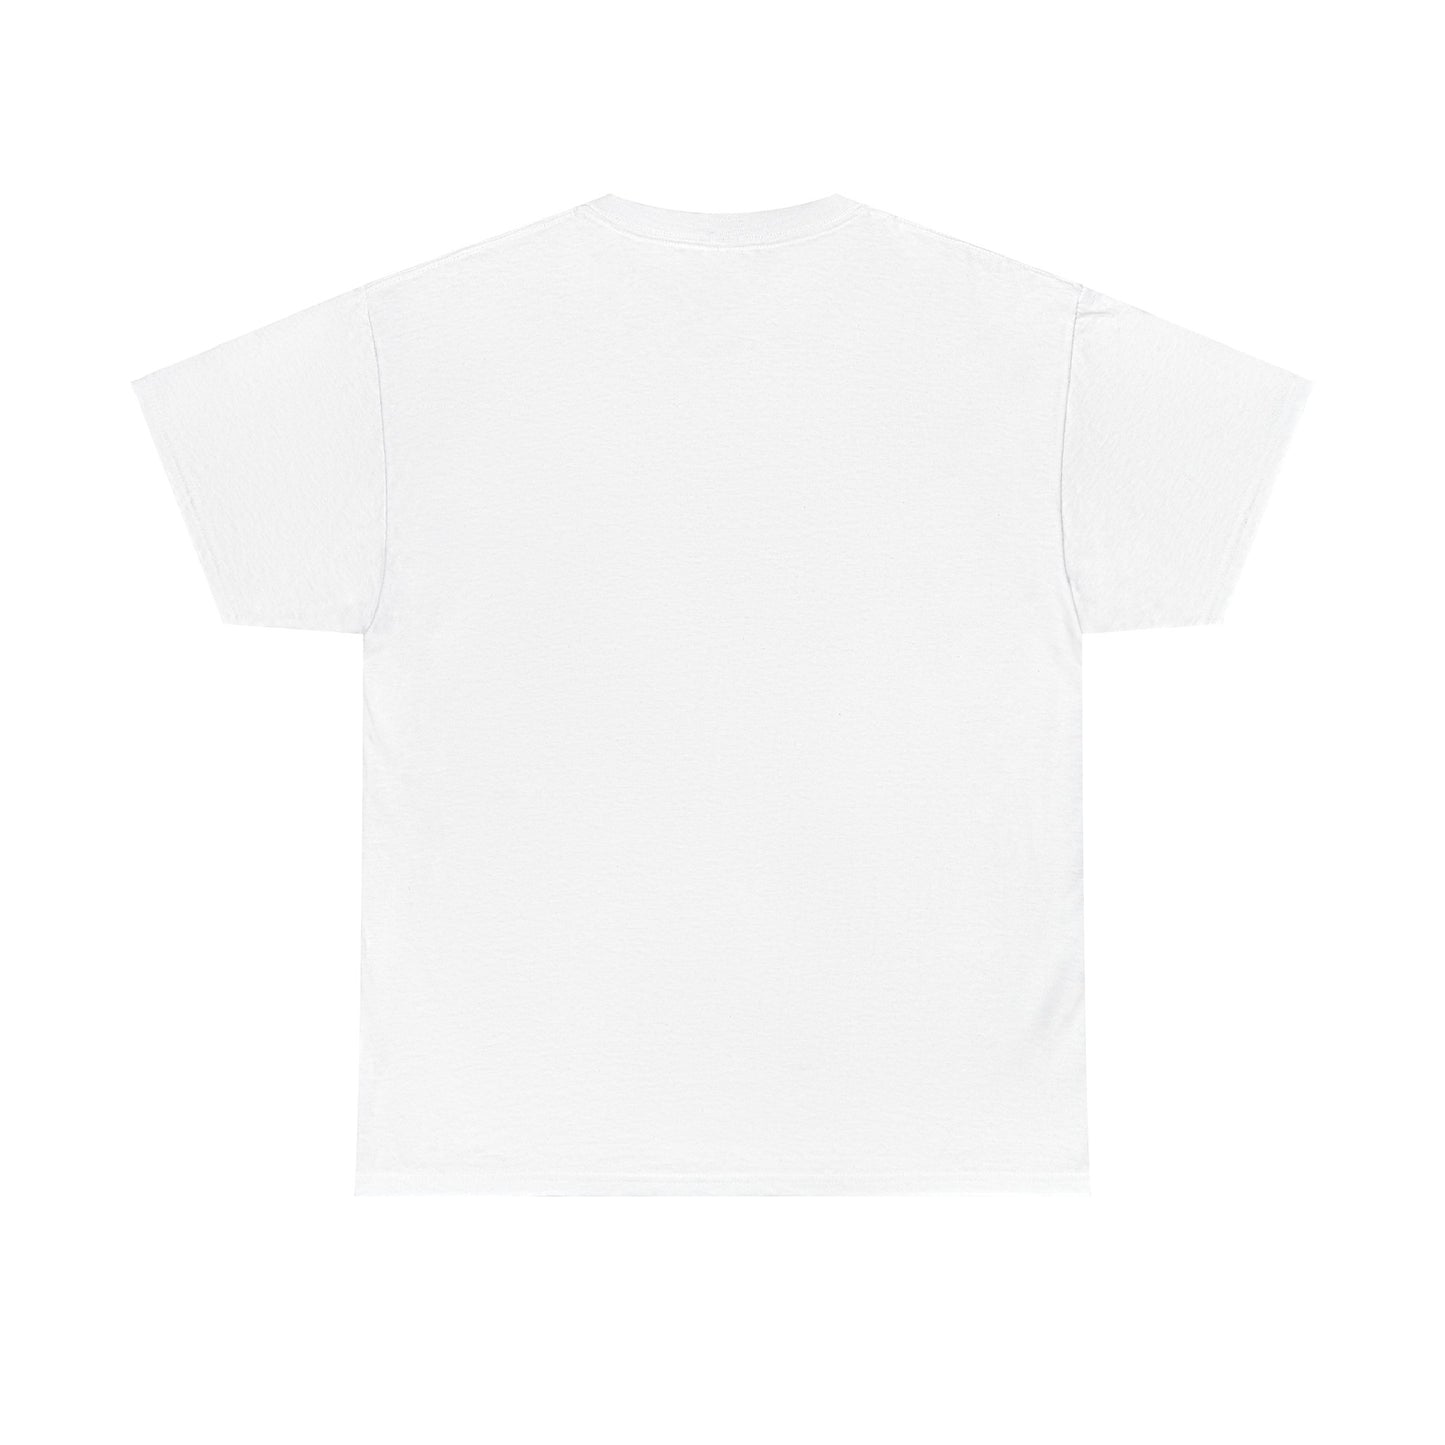 Unisex Charles Leclerc T-Shirt